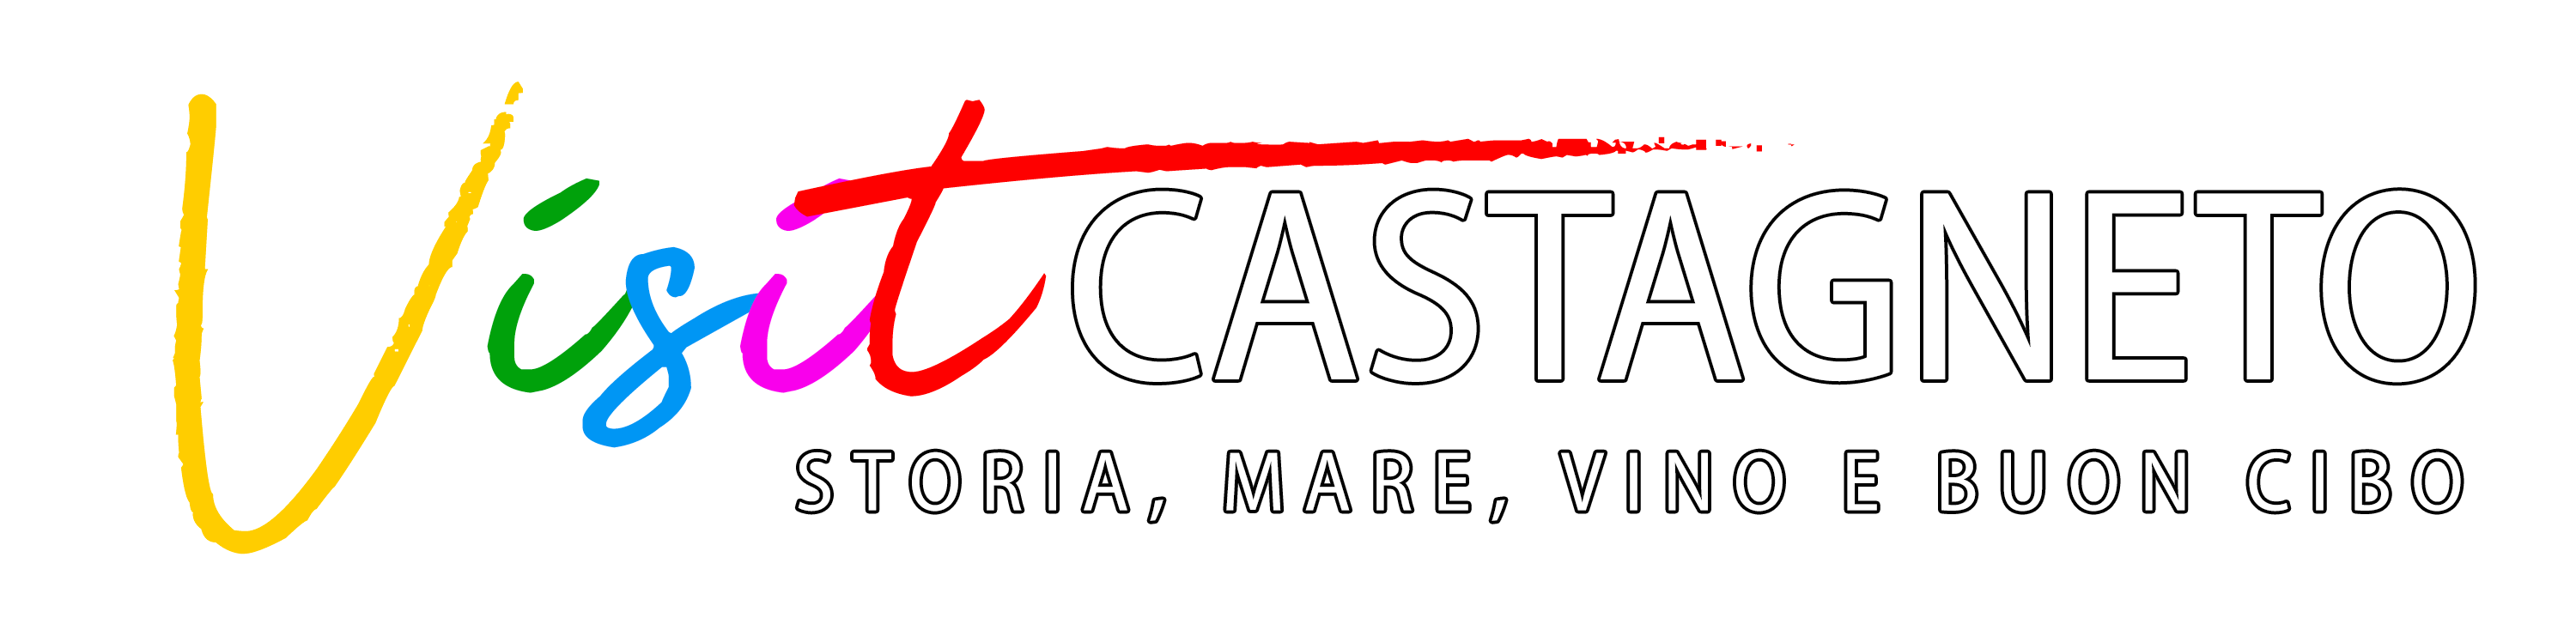 Visit Castagneto